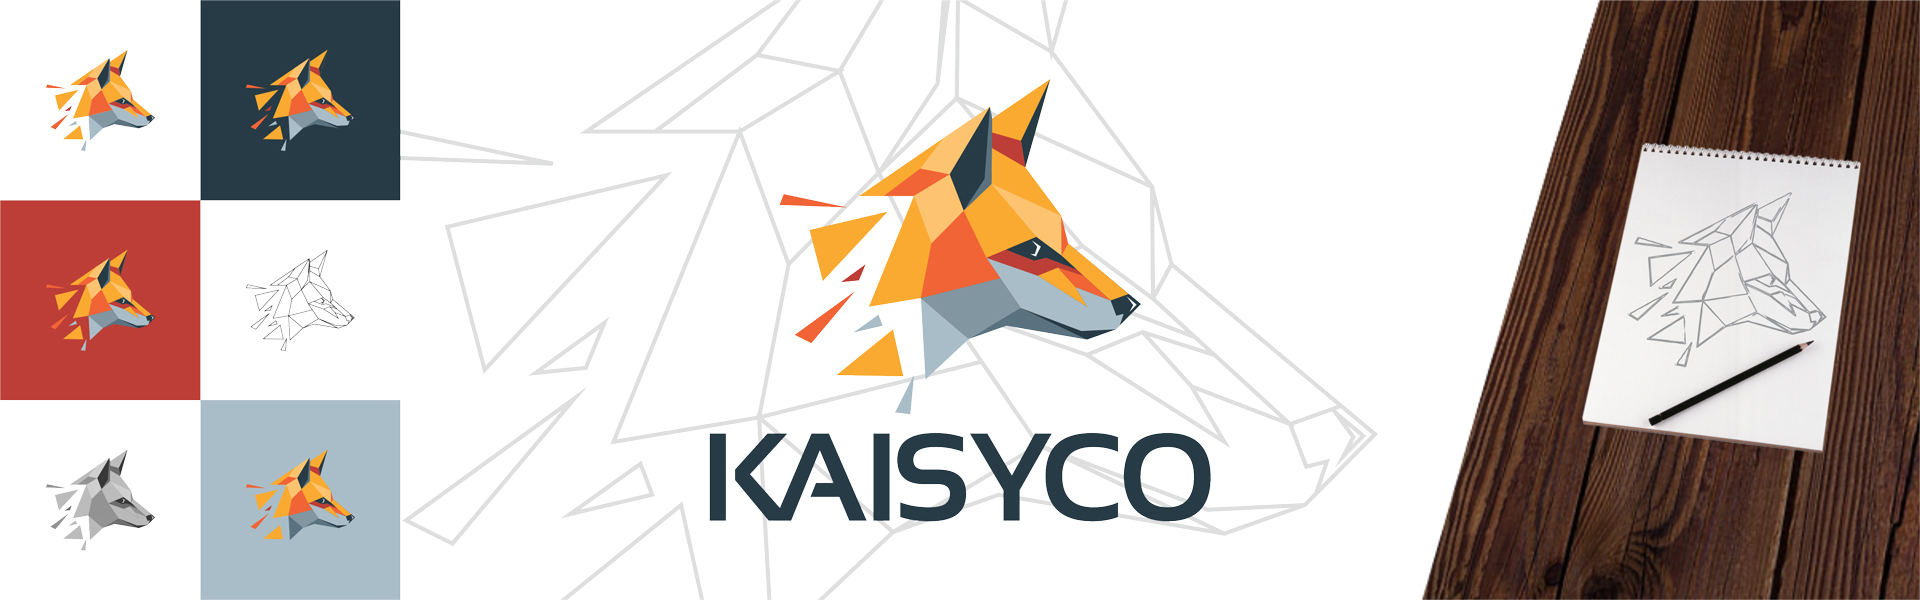 geometric fox logo design